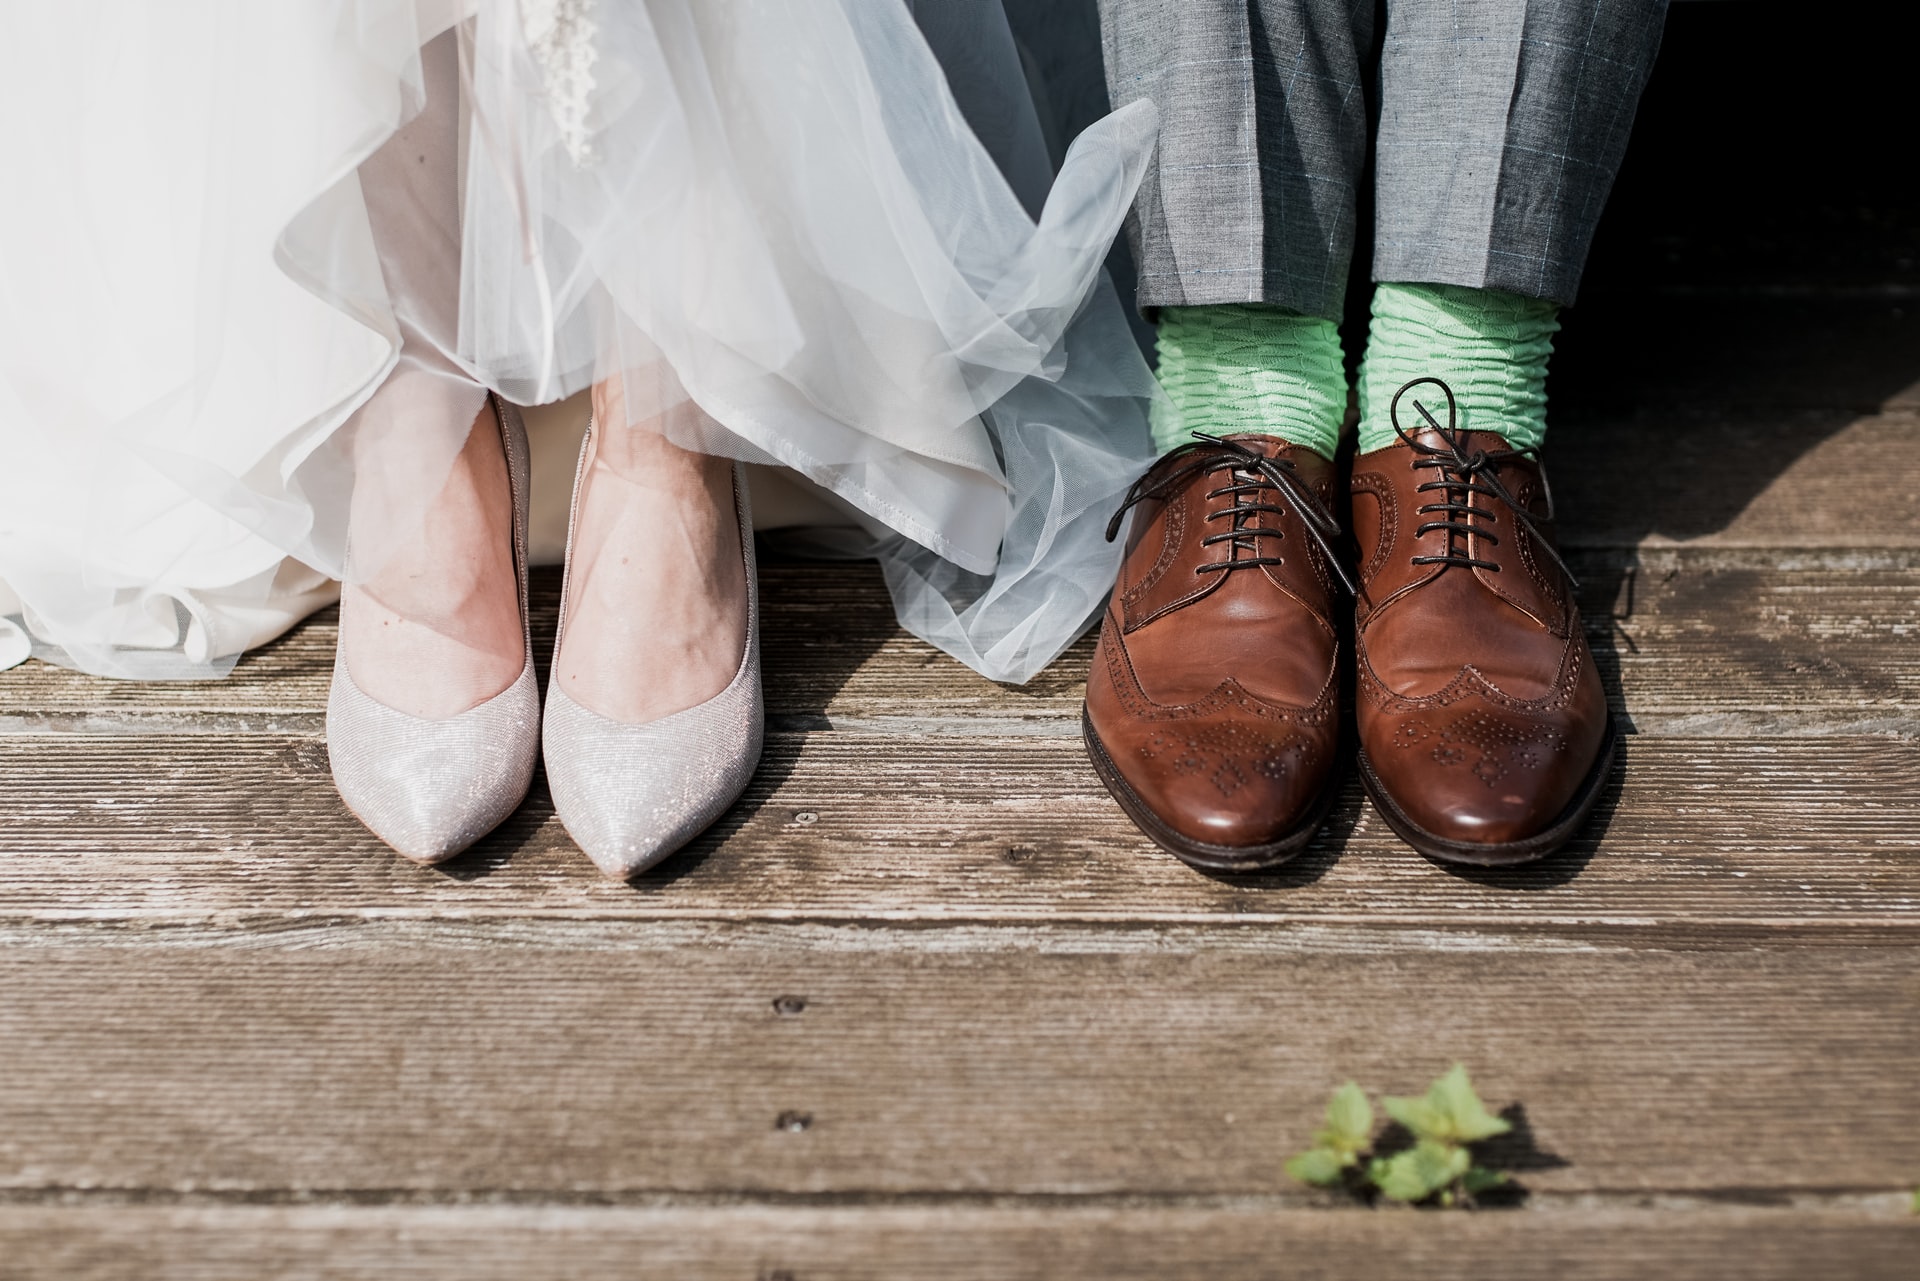 Wedding Budget Planner - Mountain Lake Weddings